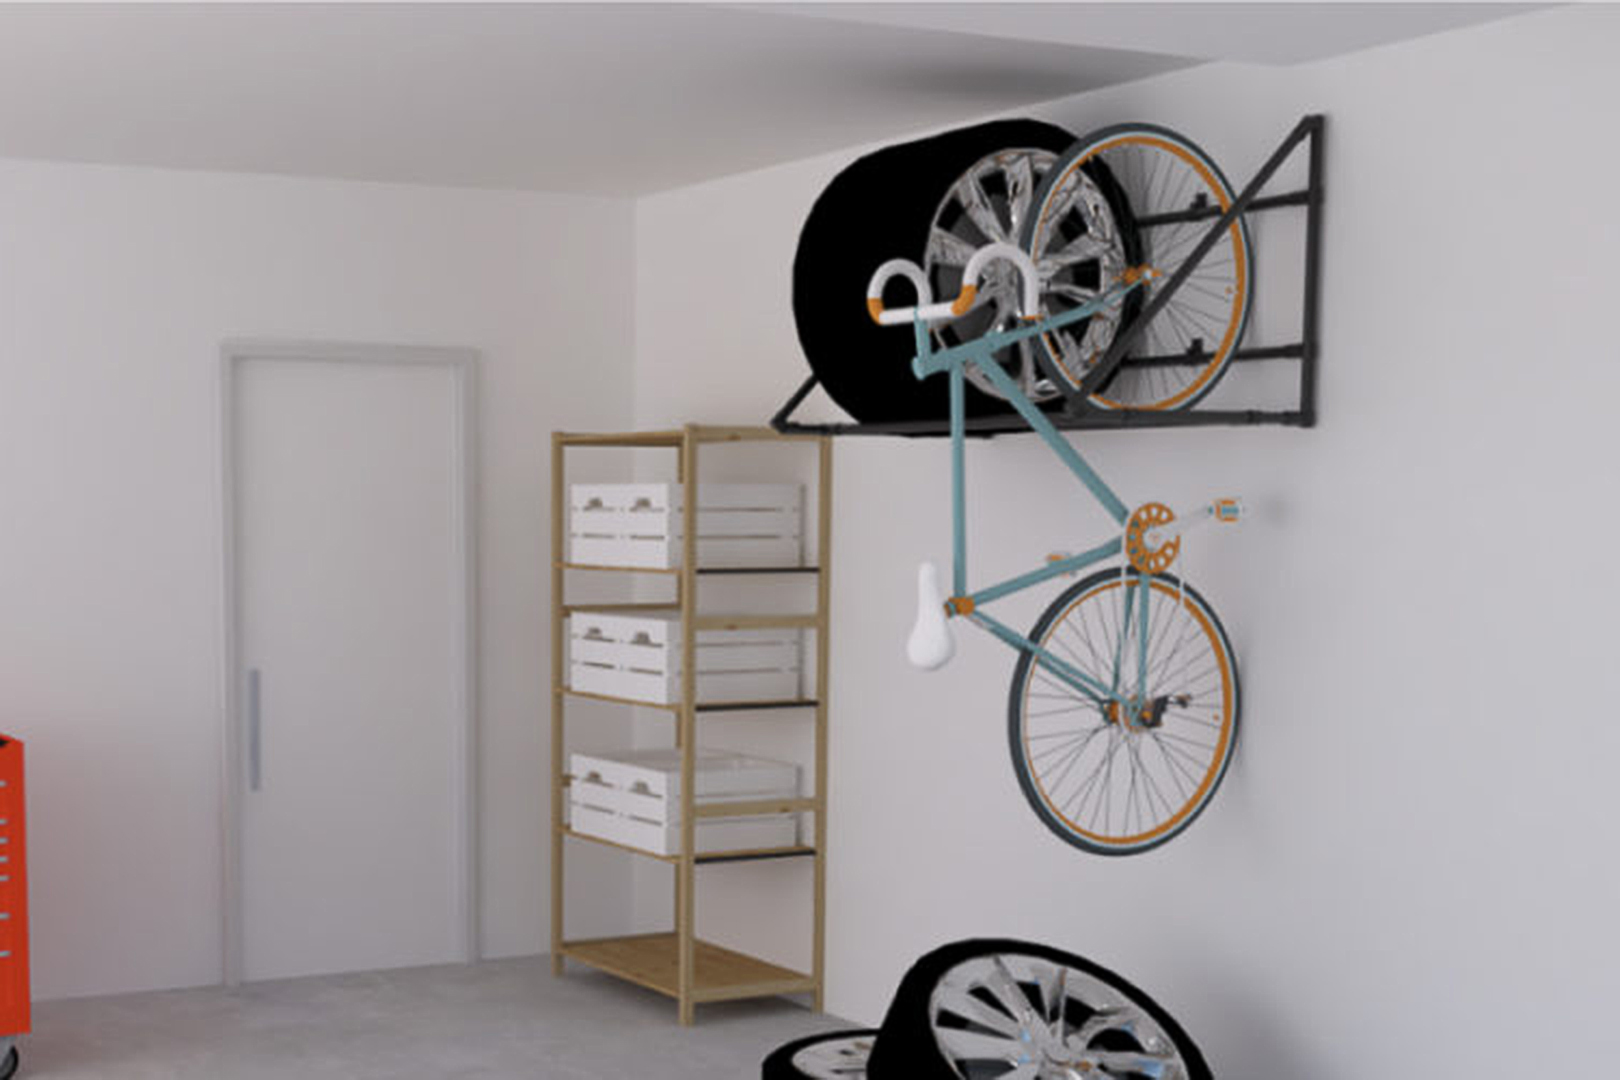 pipes and fittings bike rack - DIY garage storage